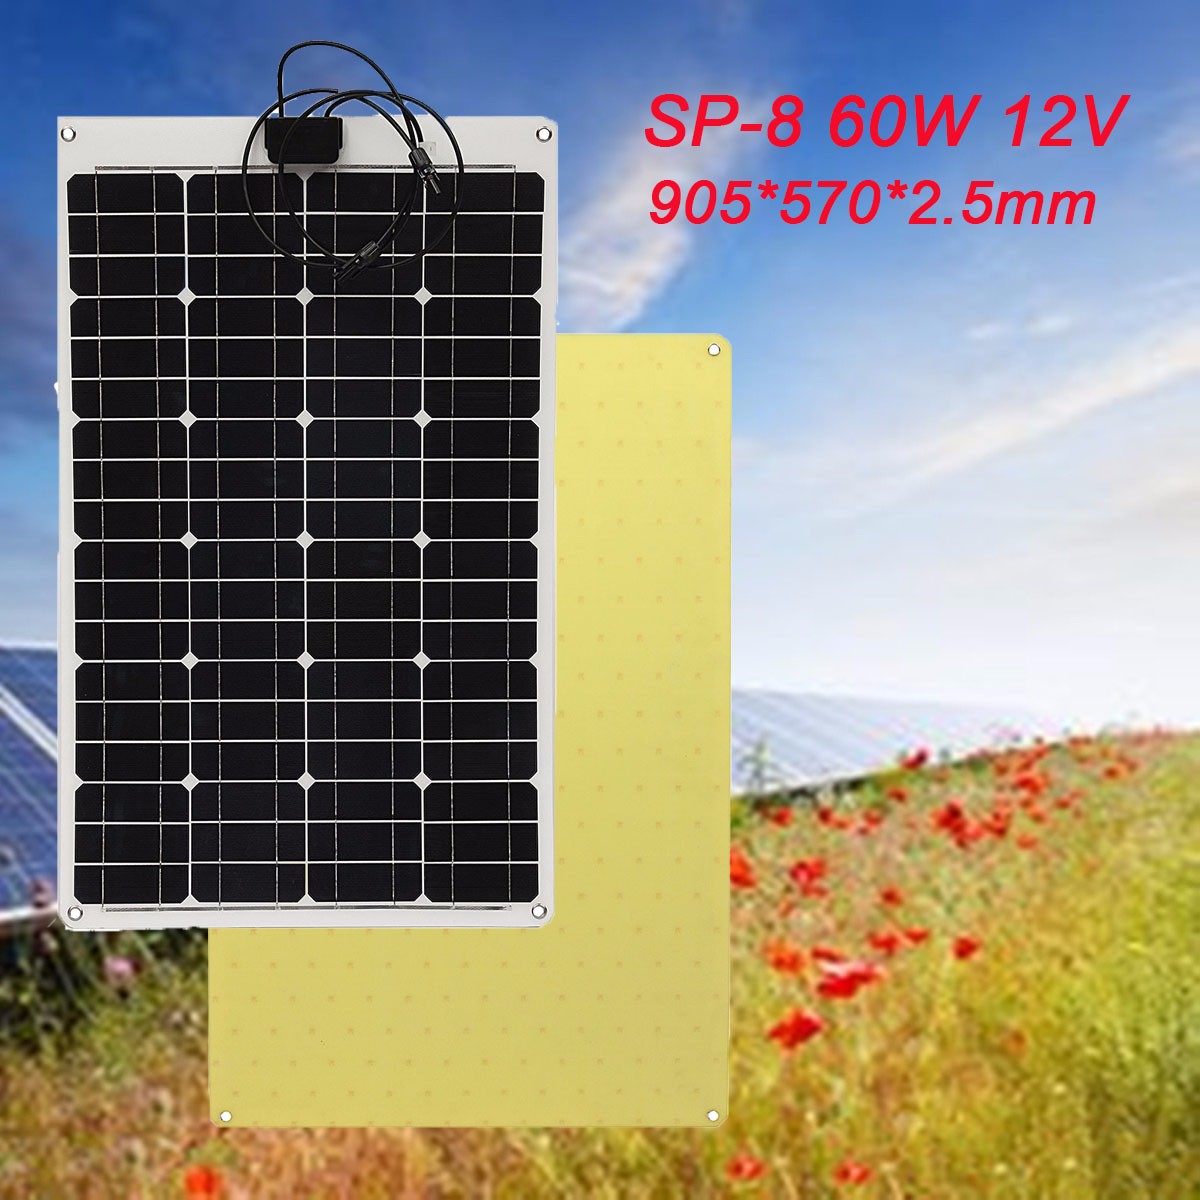 Elfelandreg-SP-8-60W-12V-Monocrystalline-Flexible-ETFT-High-Efficiency-Solar-Panel-1132081-1